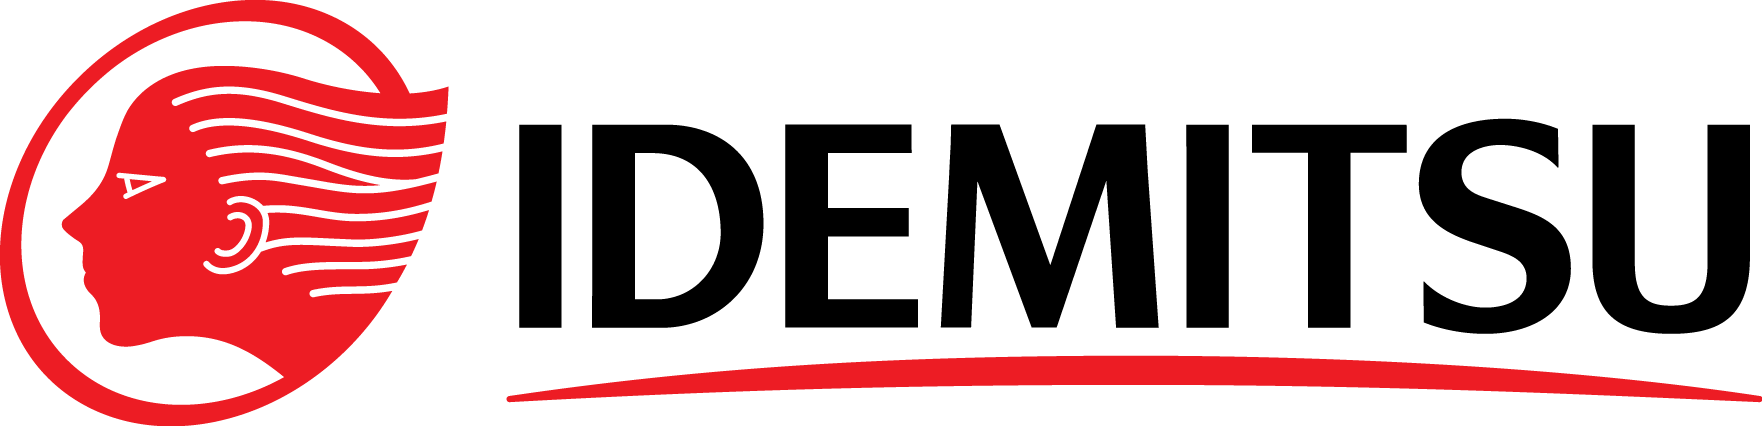 Idemitsu Brand Logo